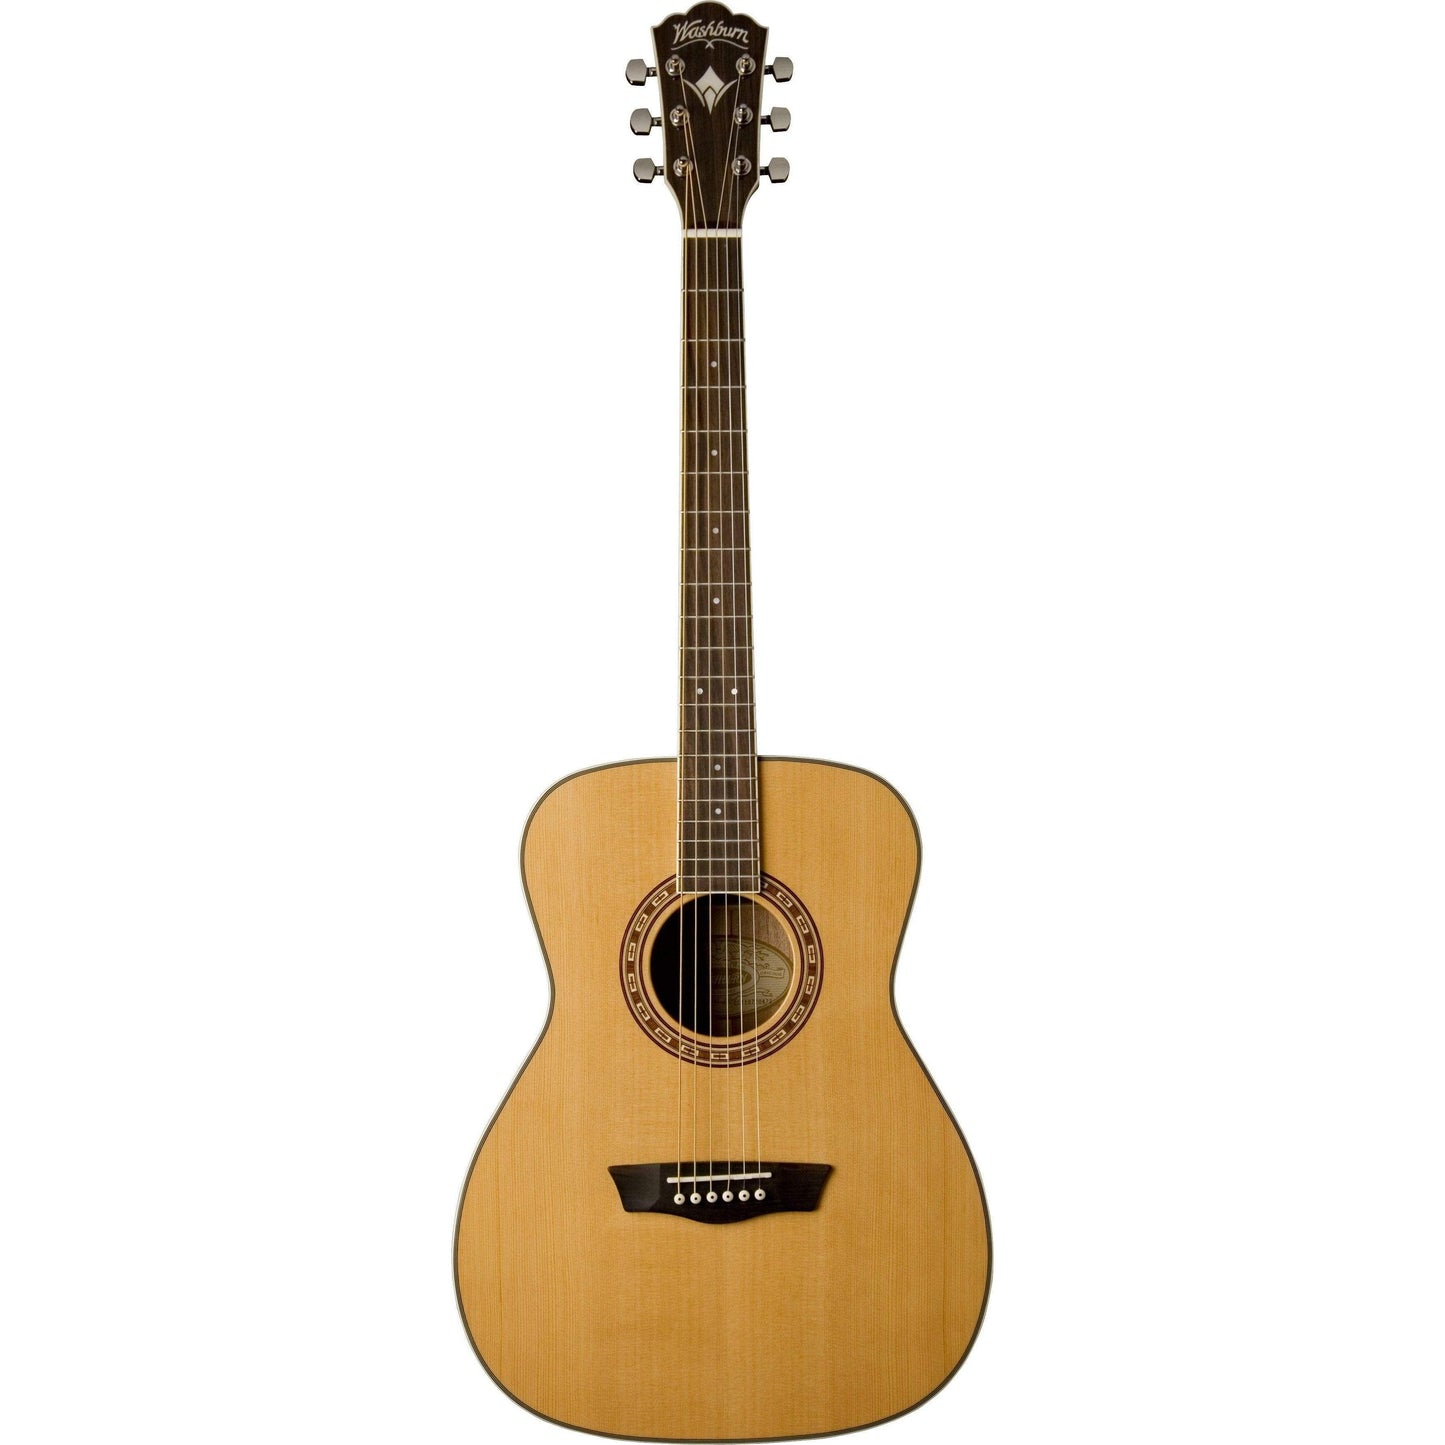 Washburn WF11S Acoustic Guitar - Natural